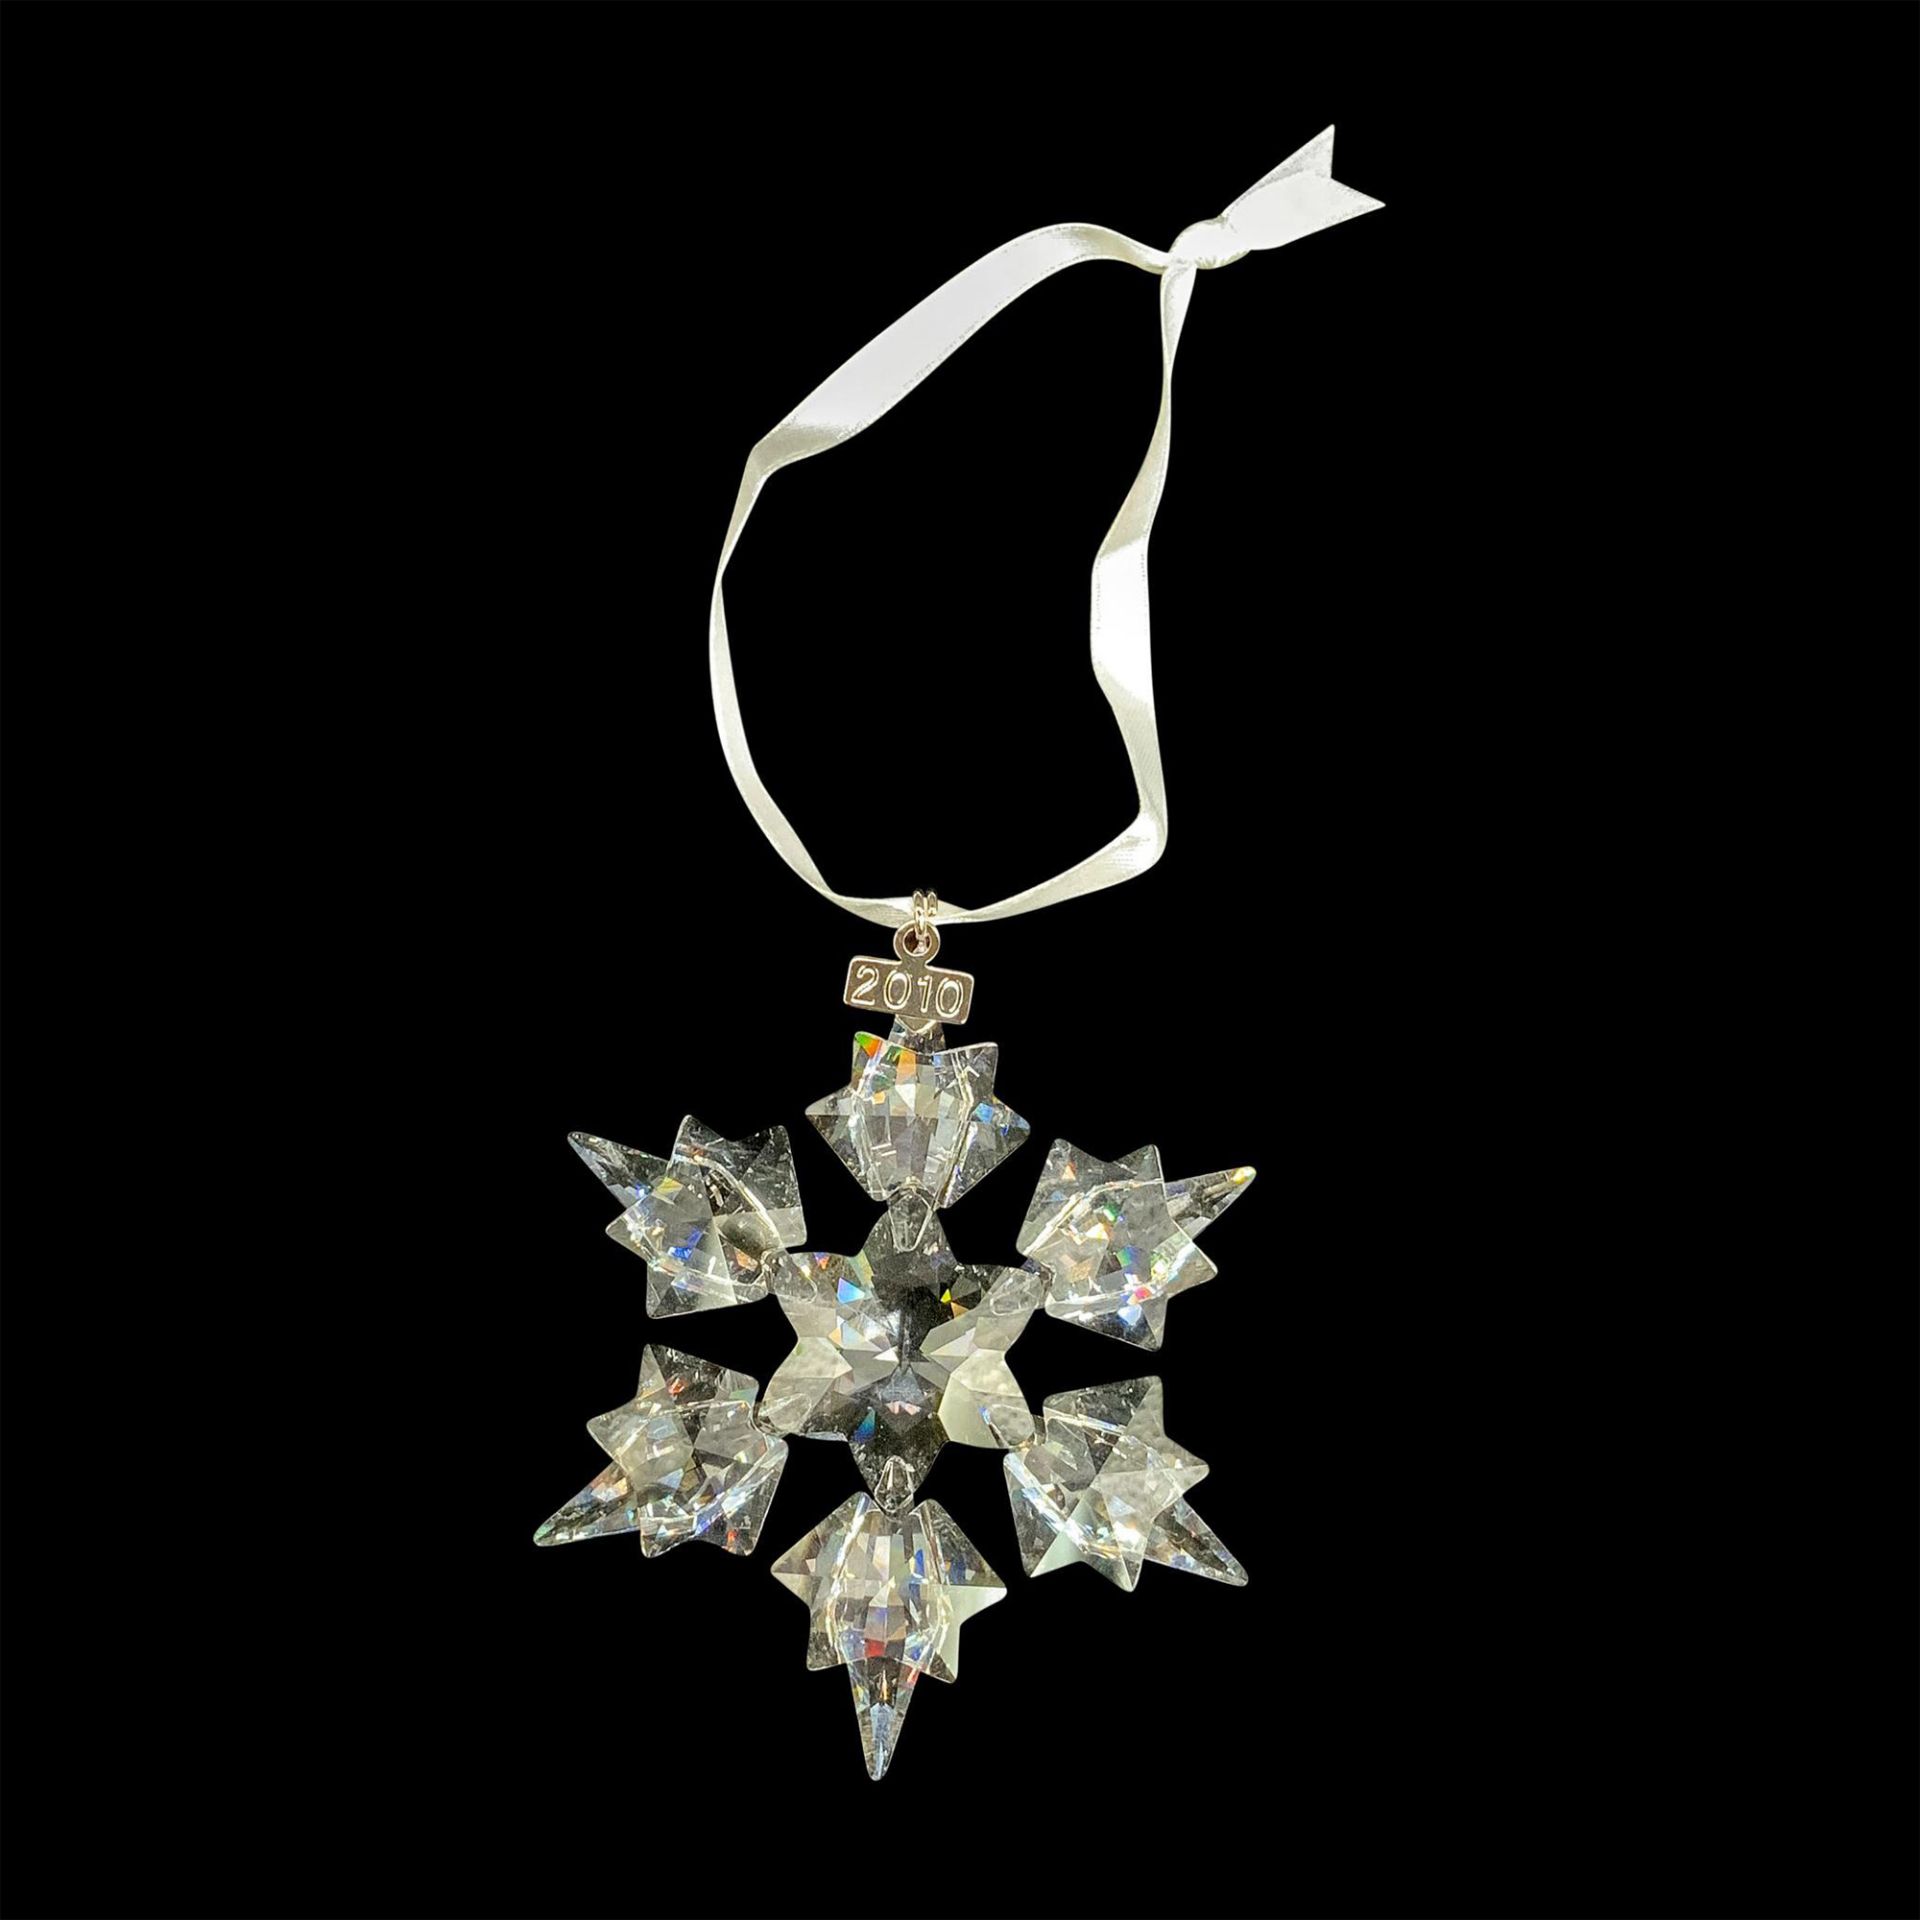 Swarovski Crystal 2010 Annual Snowflake Christmas Ornament - Image 2 of 3